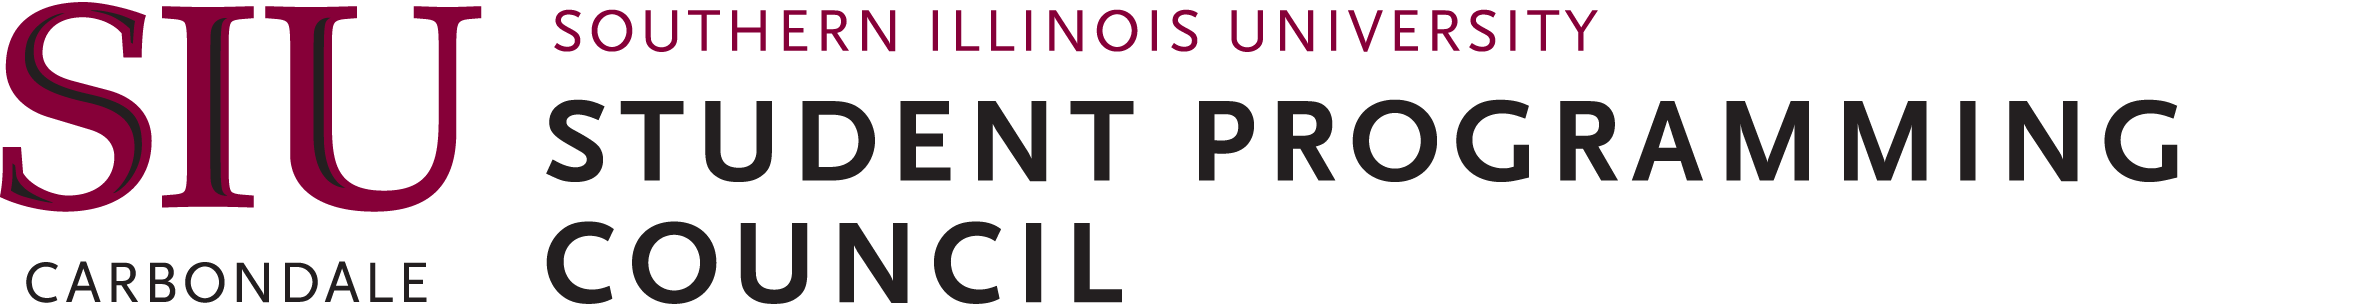 Student Programming Council logo